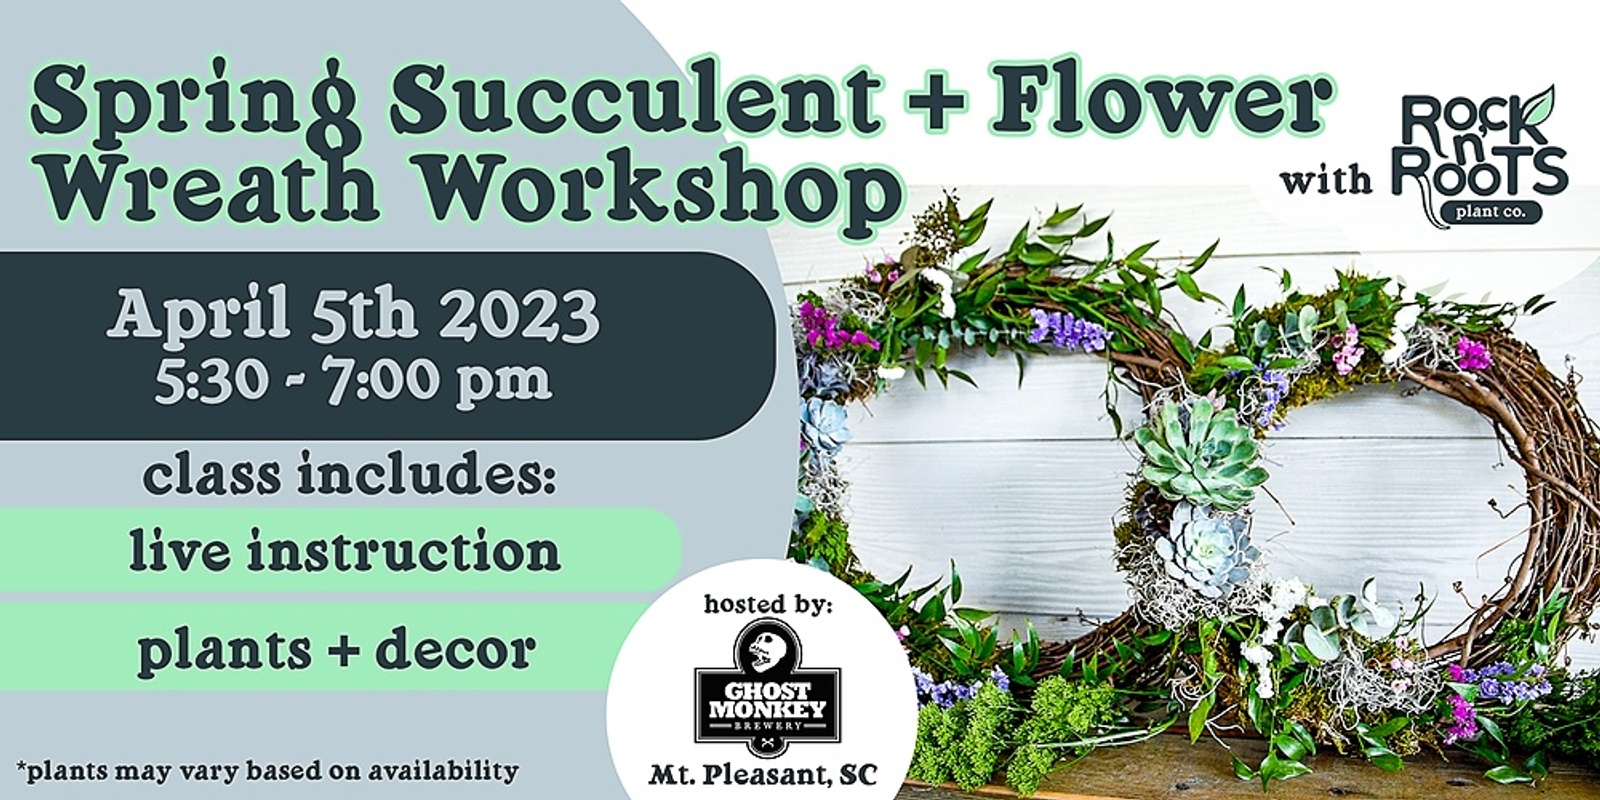 Spring Succulent + Flower Wreath Workshop at Ghost Monkey Brewery (Mount Pleasant, SC)